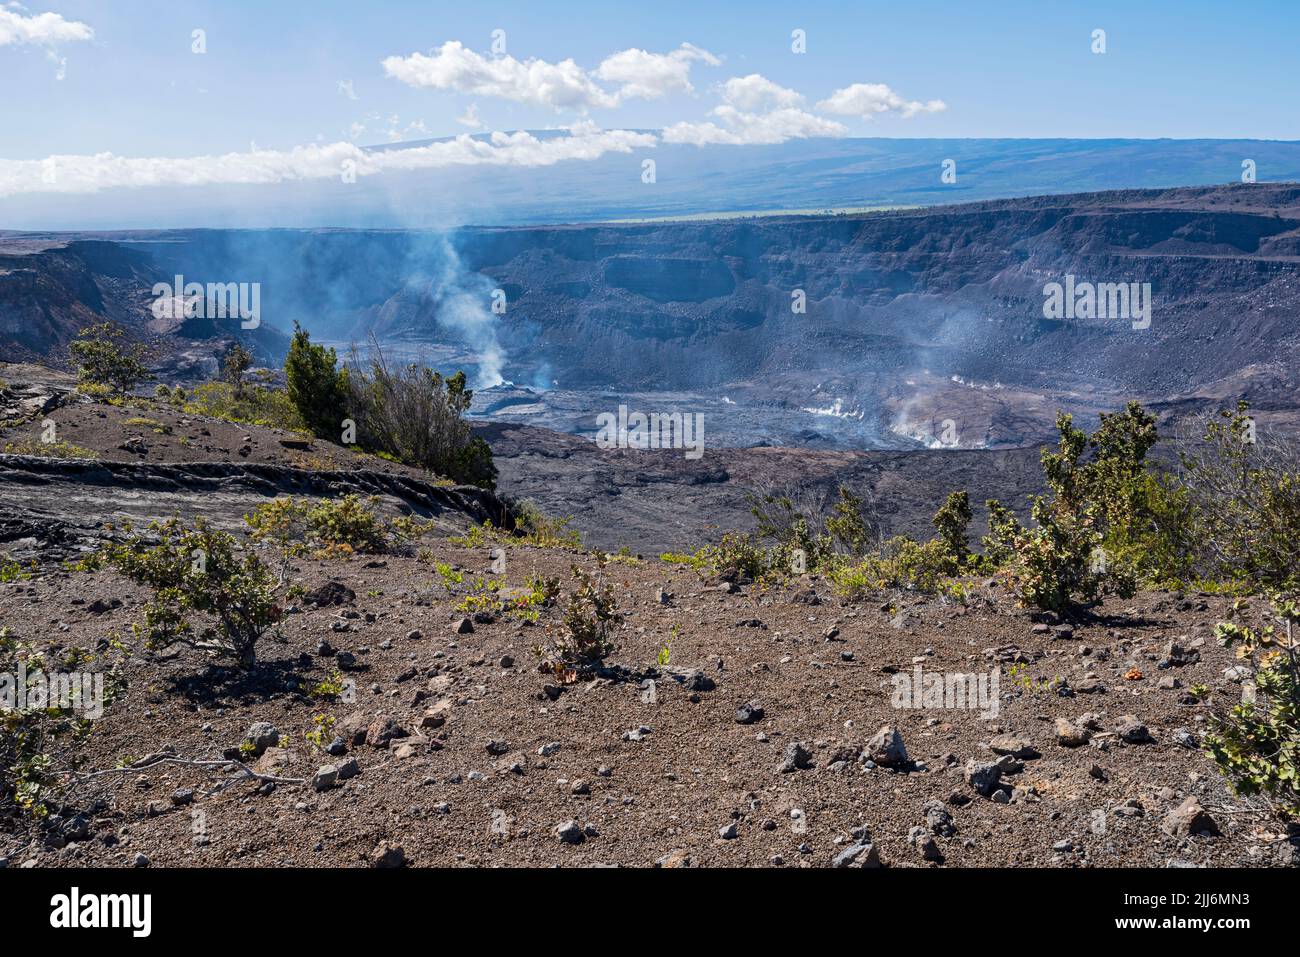 halema'uma'u crater of kilauea volcano emitting gas at hawaii volcanoes national park Stock Photo